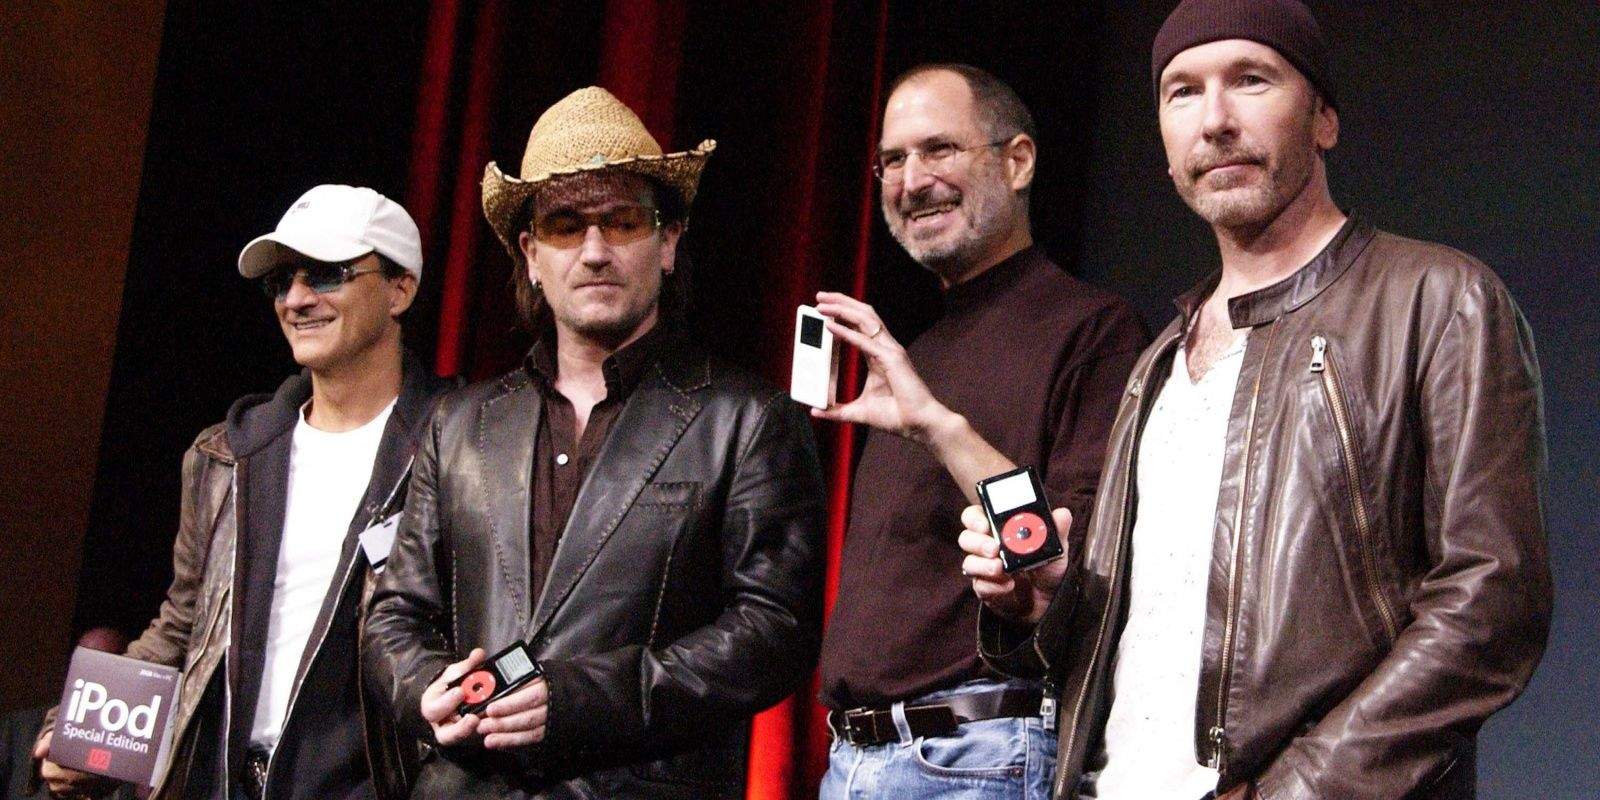 Jimmy Iovine, Bono, Steve Jobs and The Edge